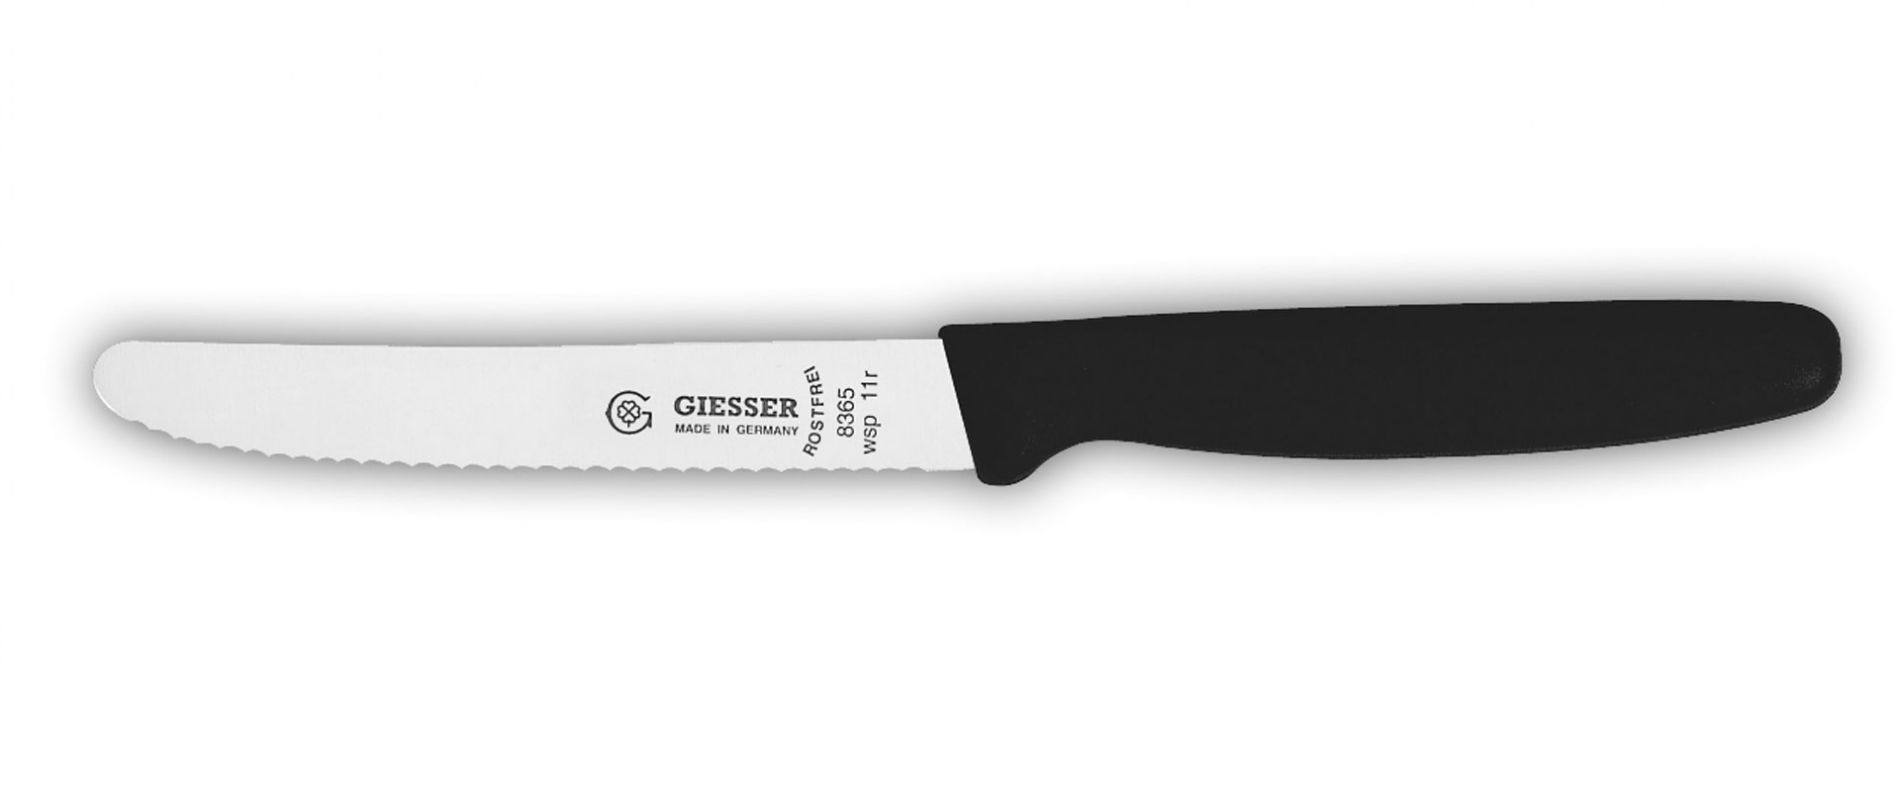 Cuchillo Giesser universal. Hoja ondulada de 11cm